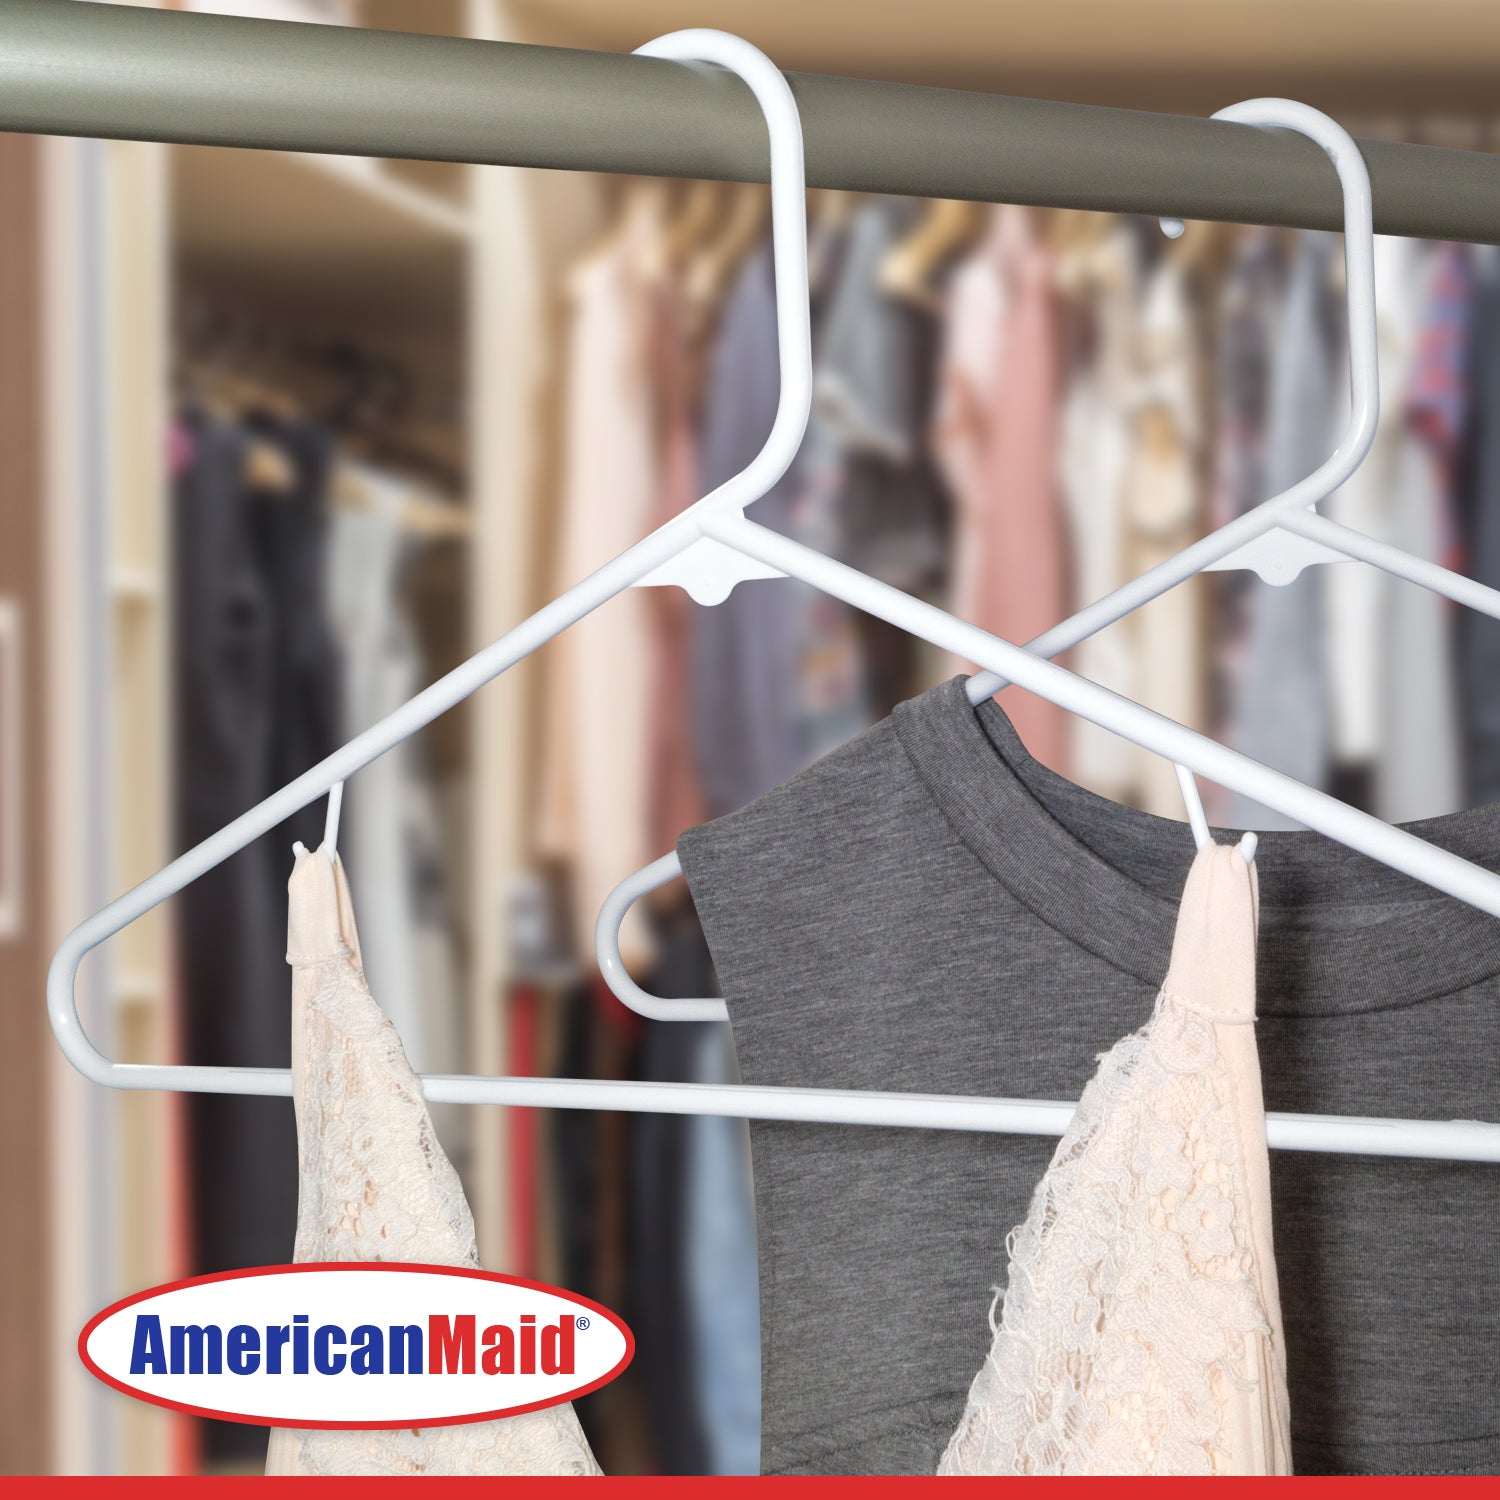 Wholesale Plastic Hangers  Hangers In Bulks - American Retail Supply